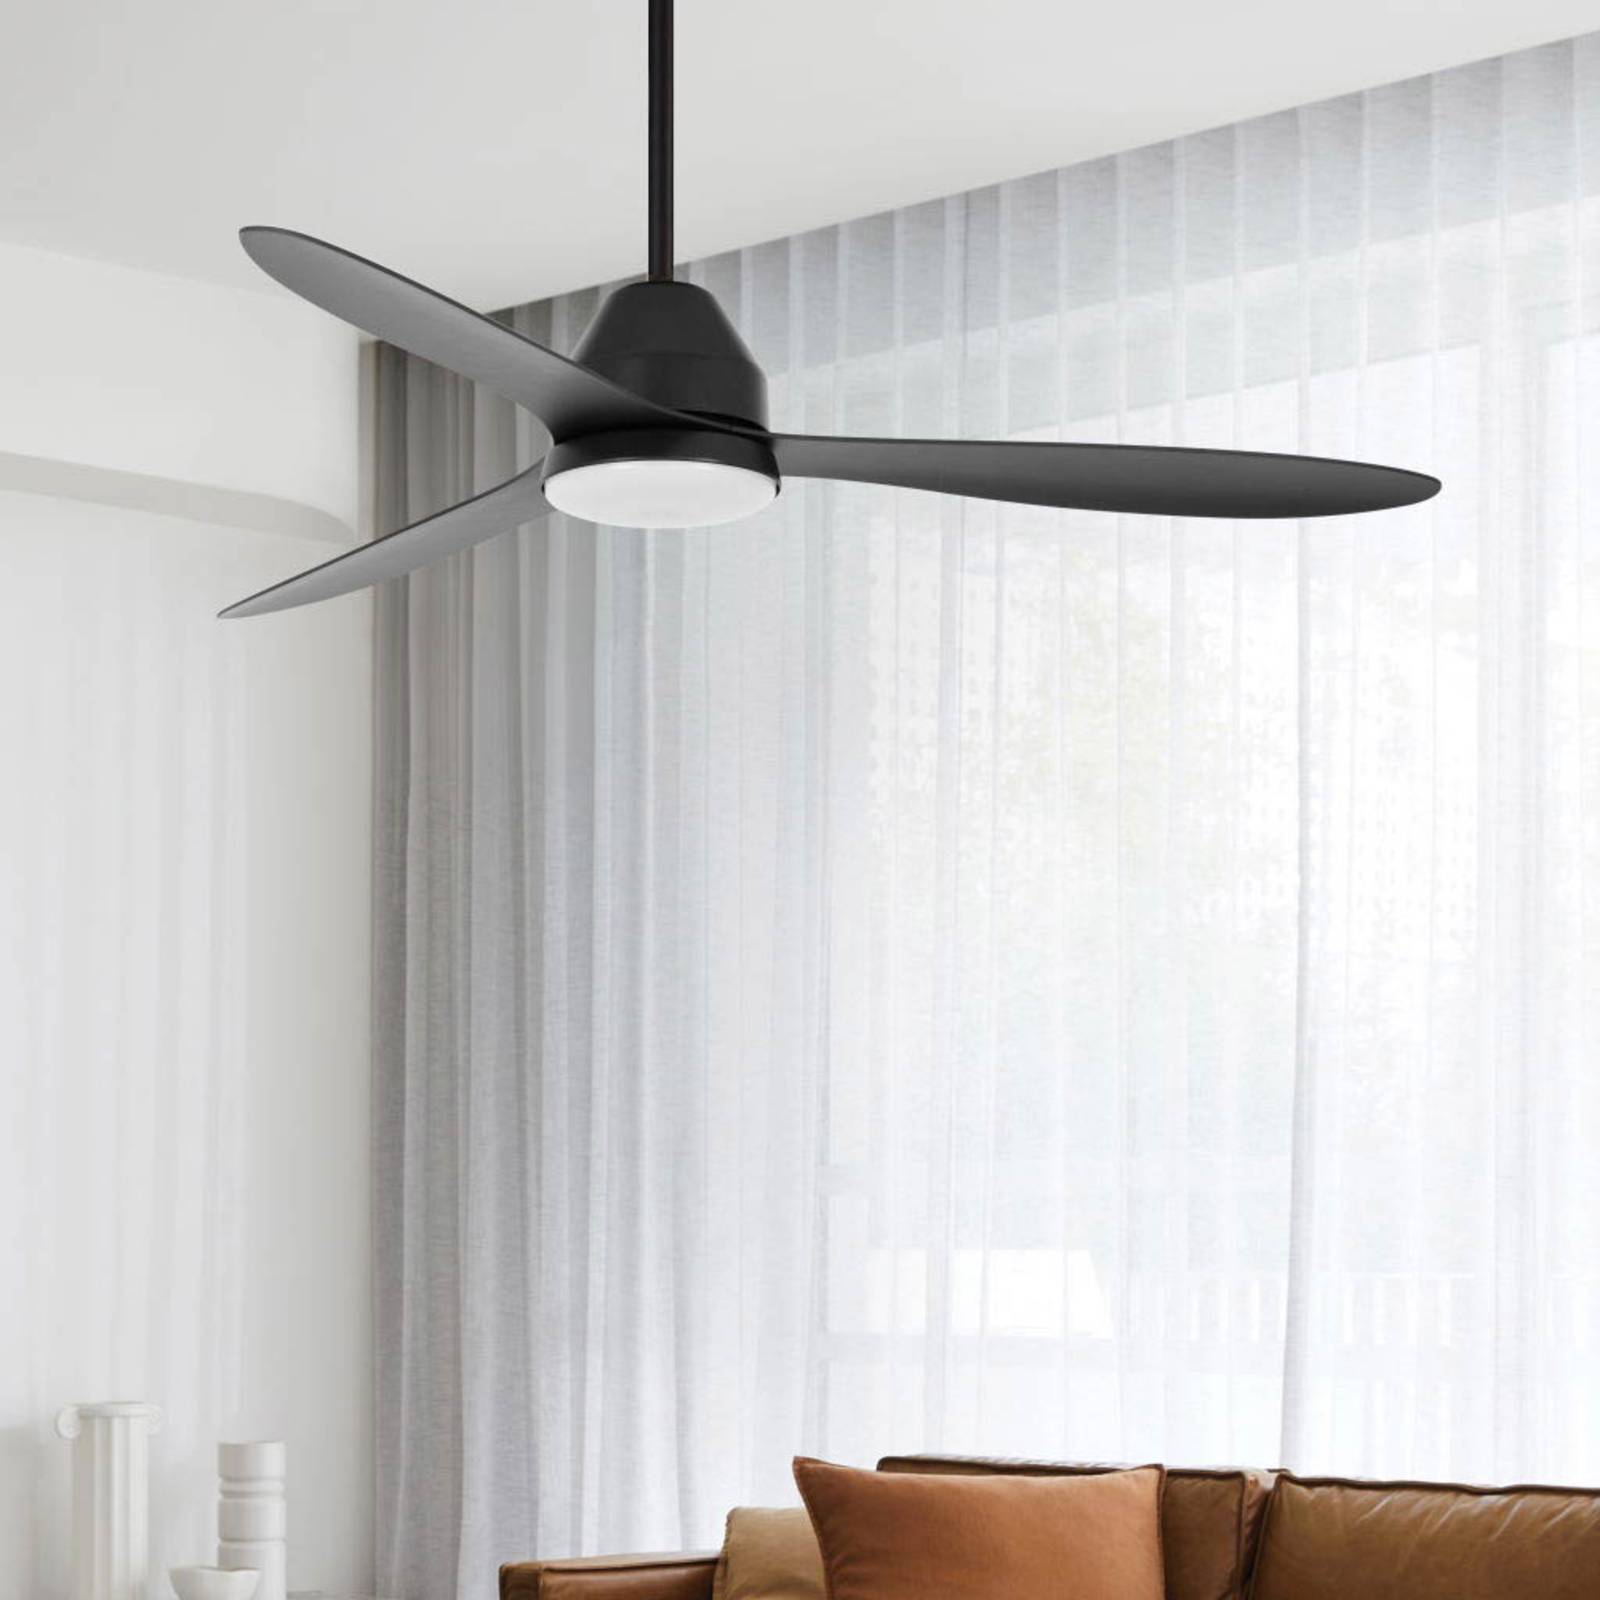 Whitehaven ceiling fan with LED light, black